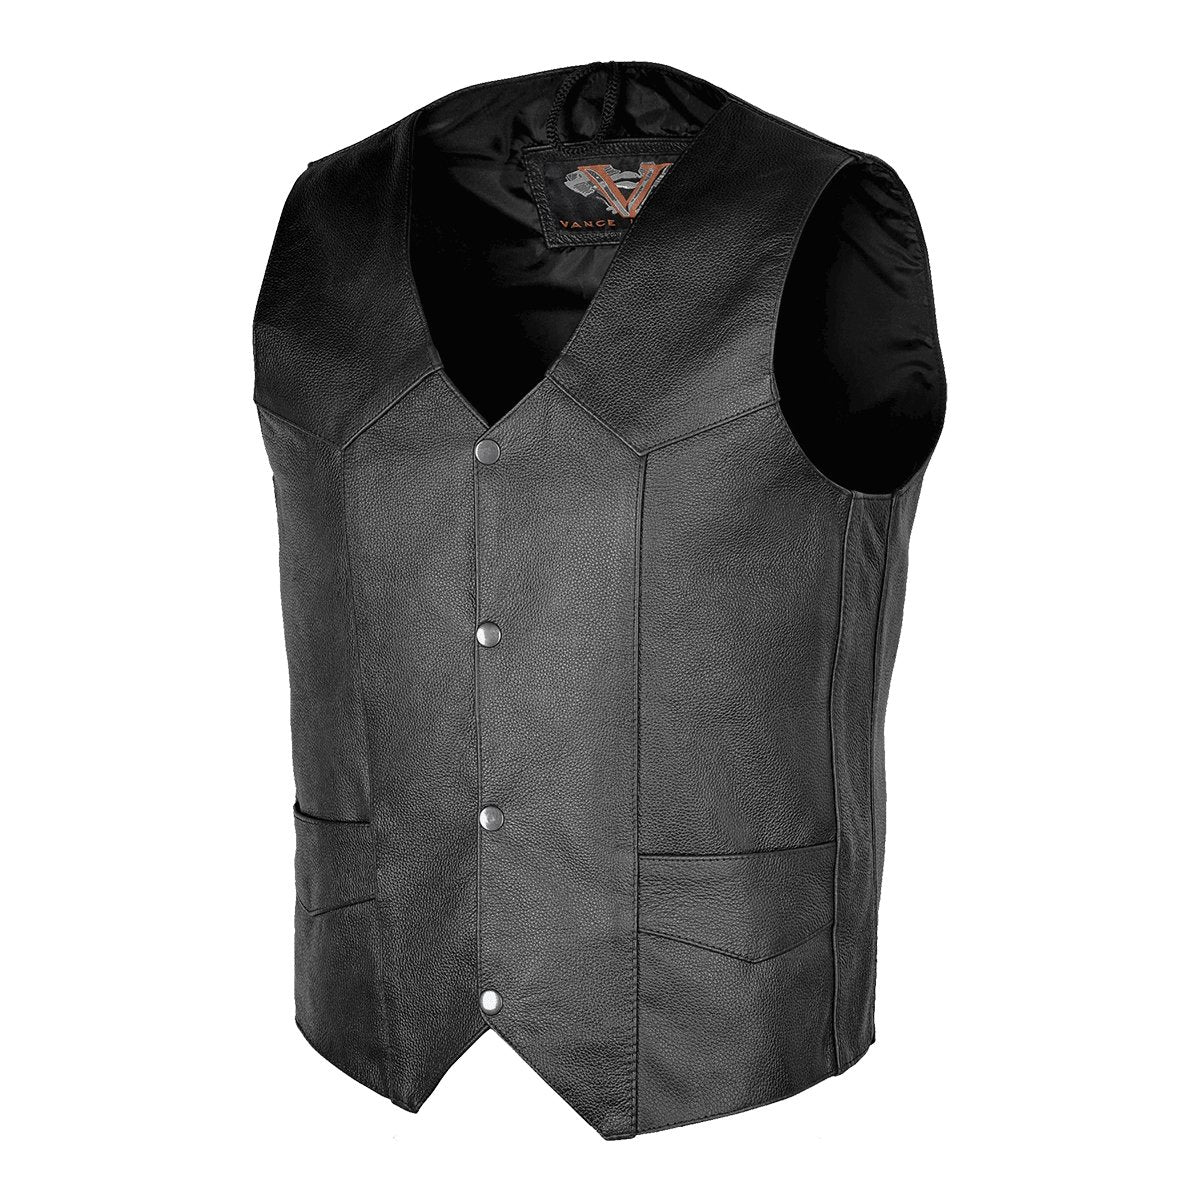 Vance Men's Basic Leather Plain-Side Vest